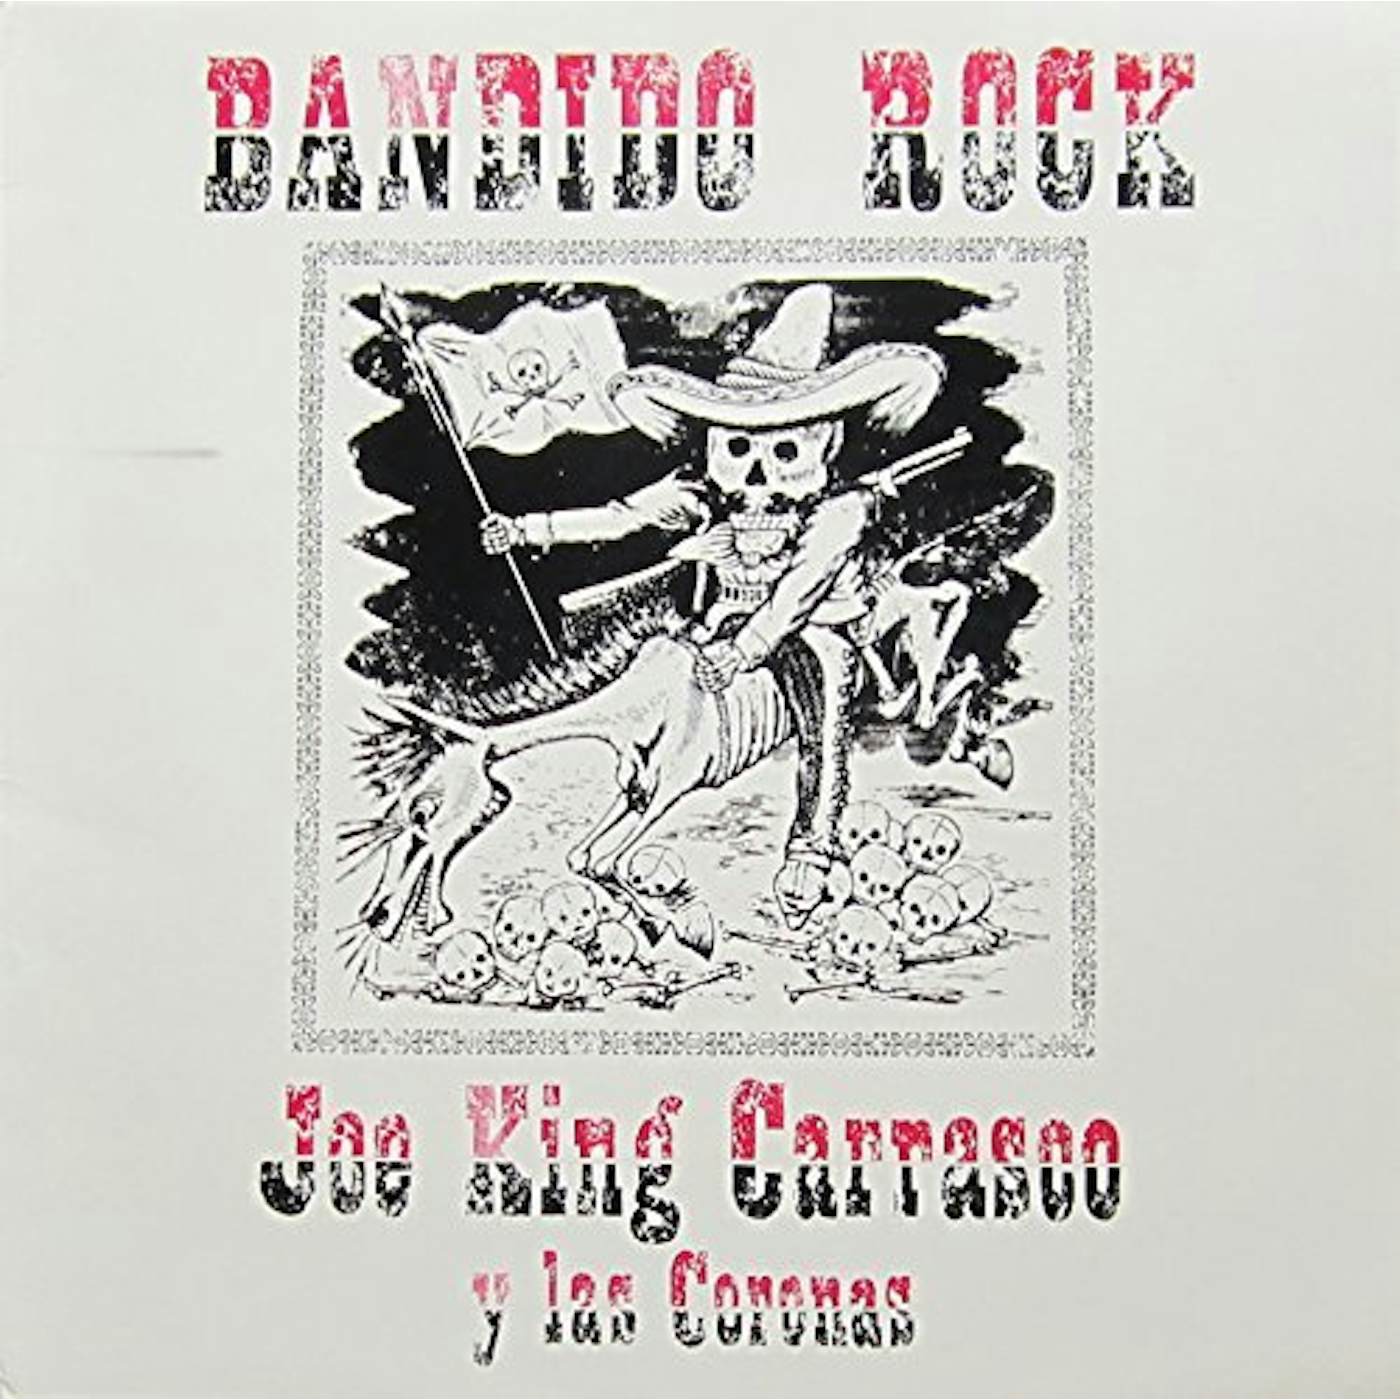 Joe "King" Carrasco Bandido Rock Vinyl Record